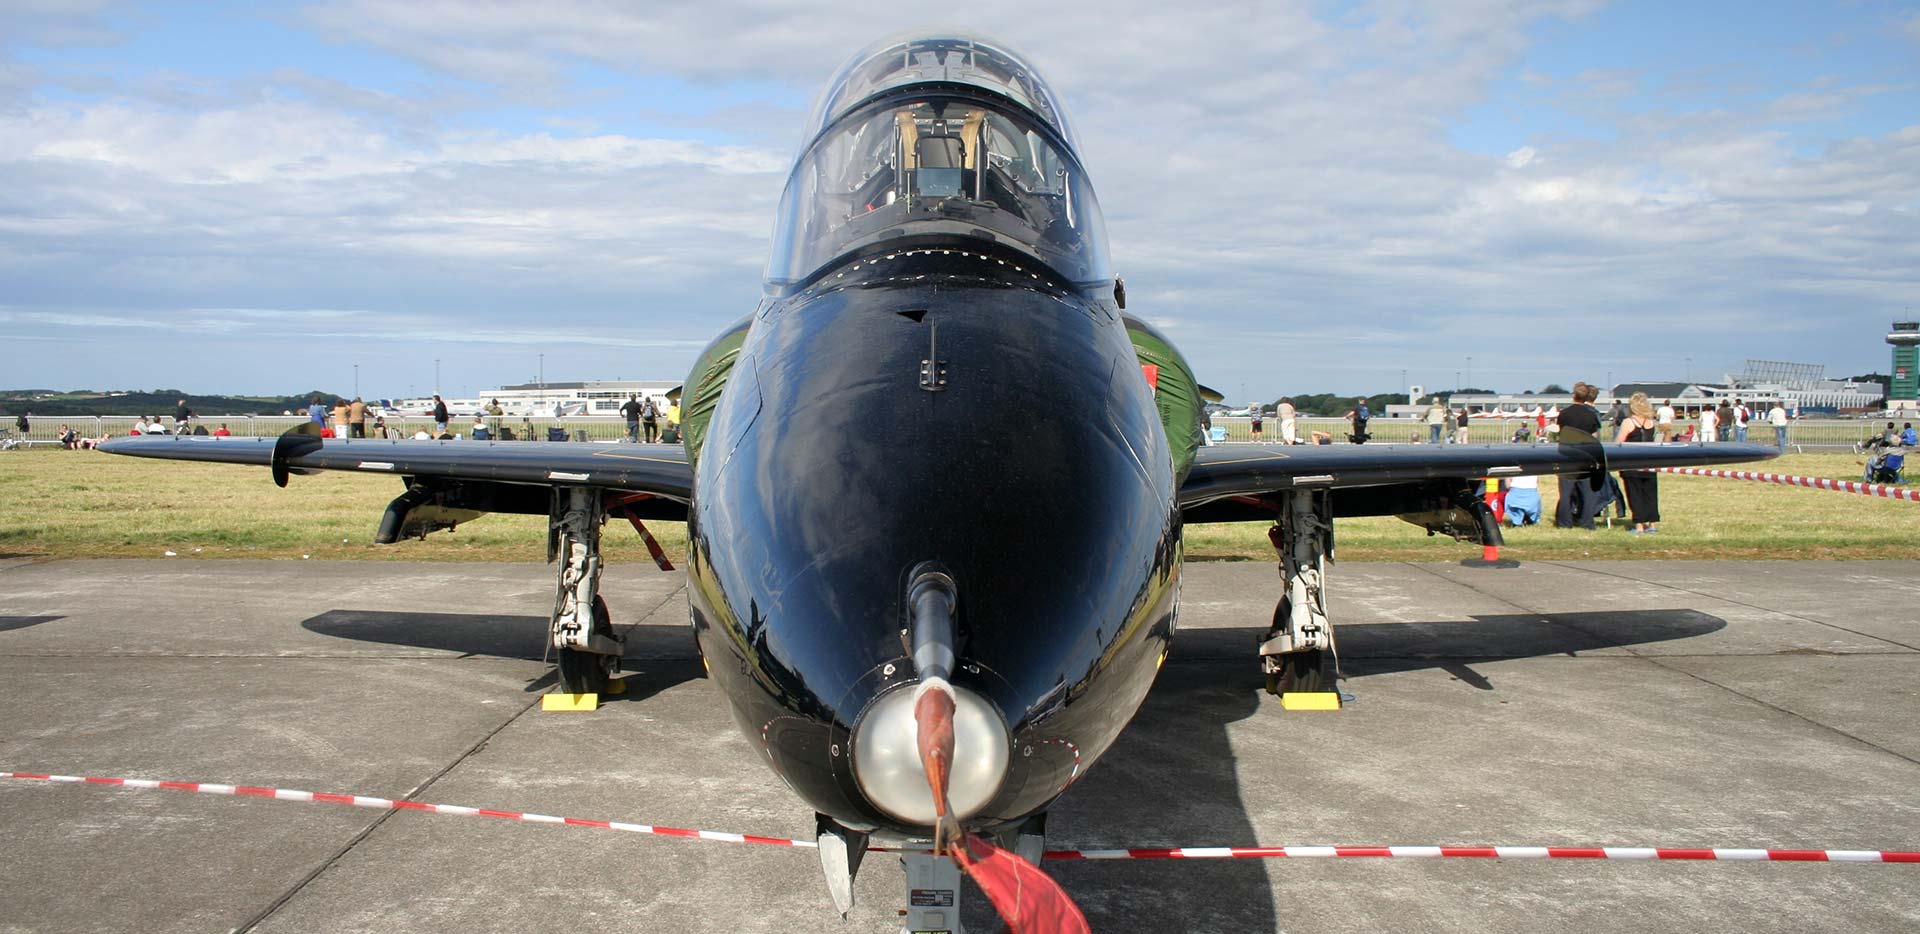 Nose view of BAE Hawk jet plane, displayed at an airshow